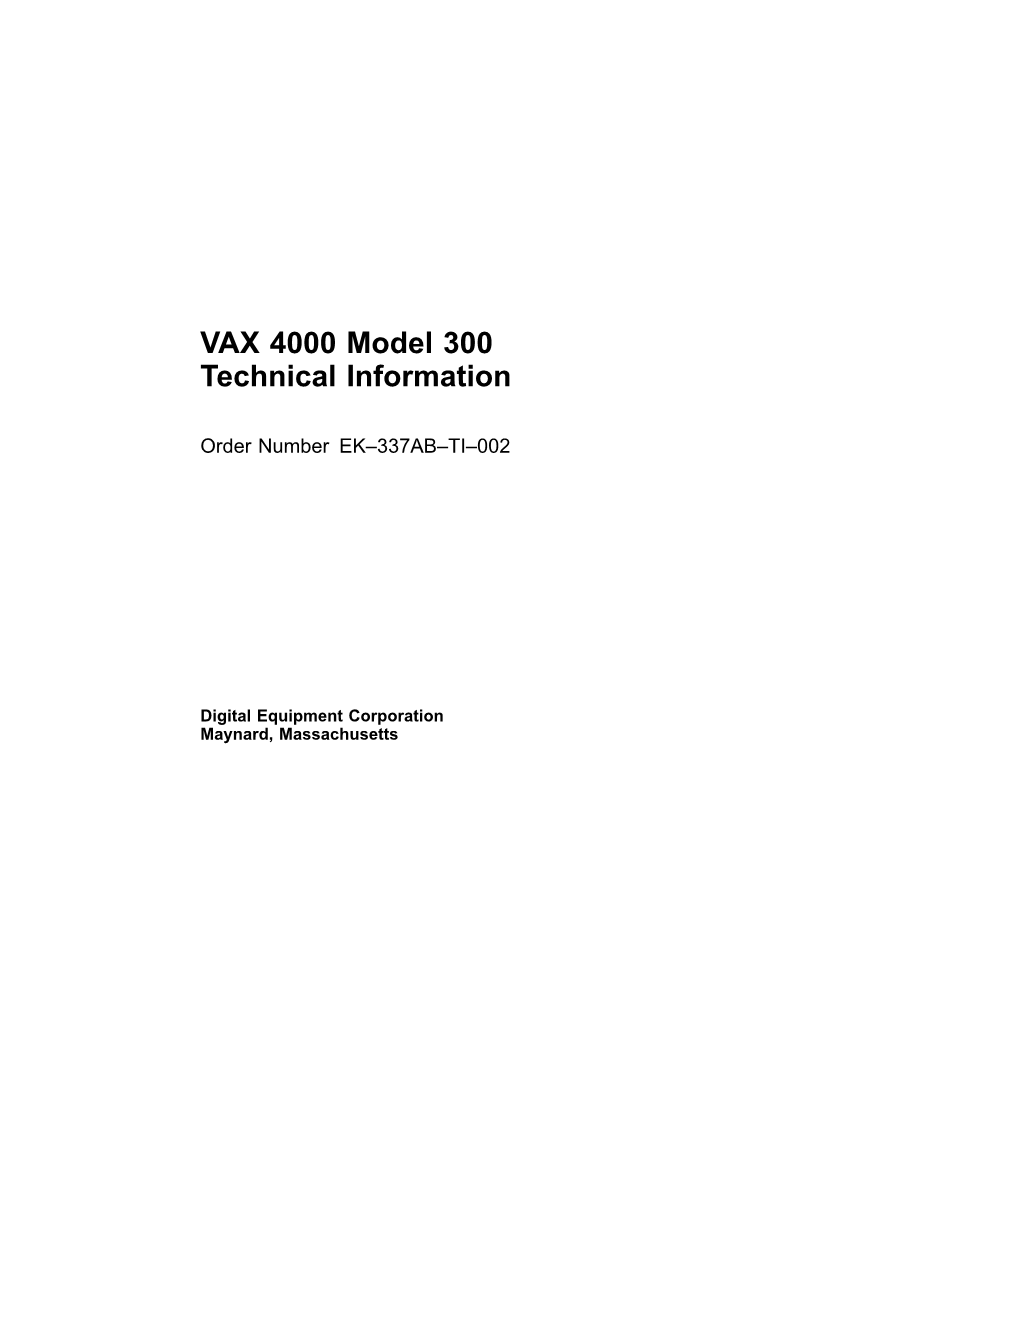 VAX 4000 Model 300 Technical Information